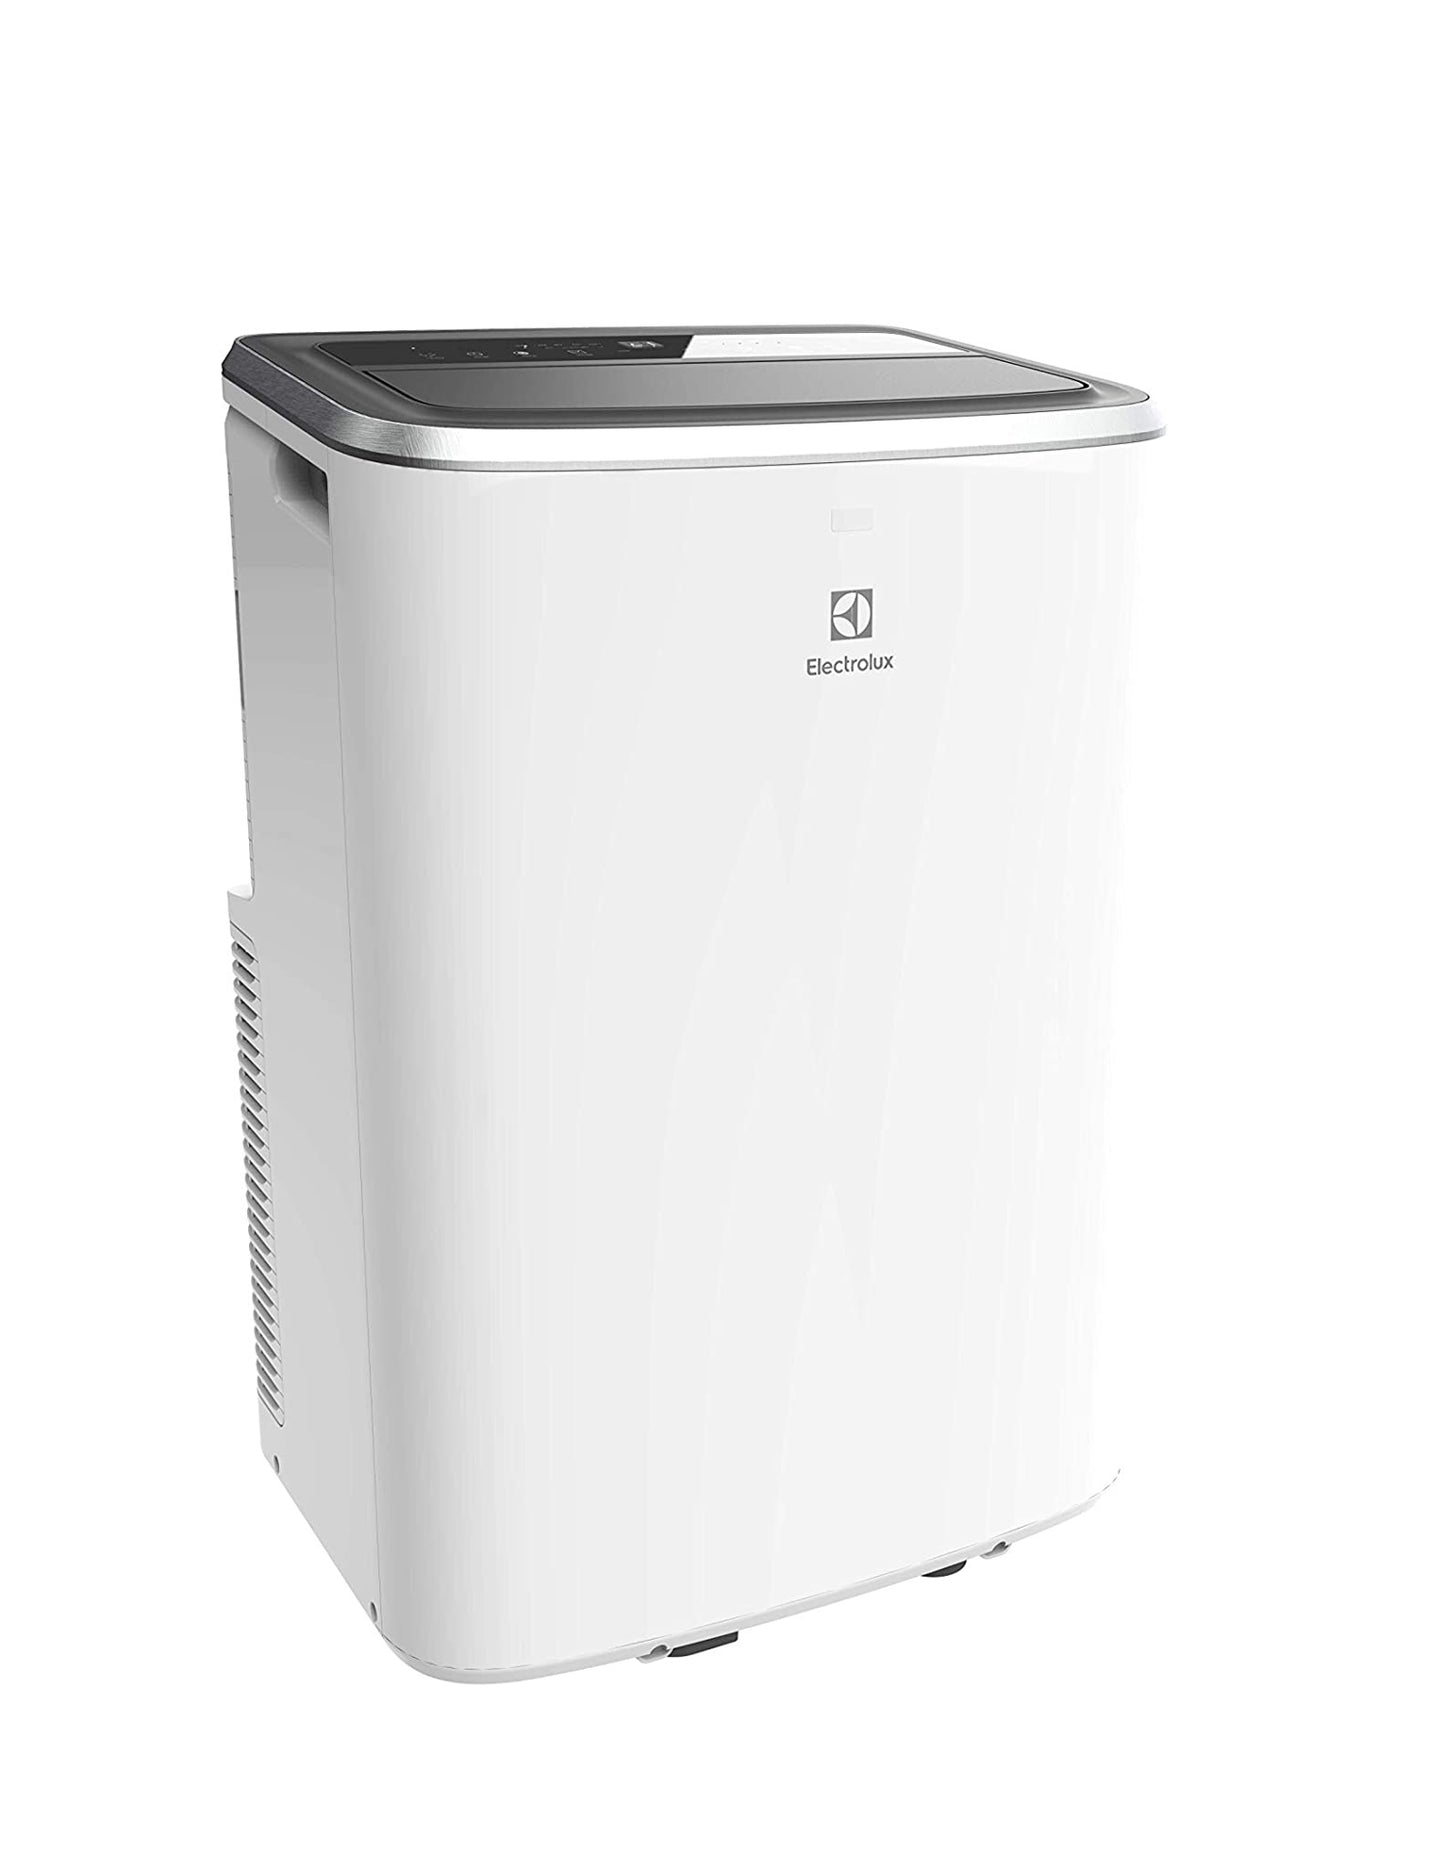 Electrolux Portable Air Conditioner, 12000 BTU, Heat & Cool, EP12A59ICHI